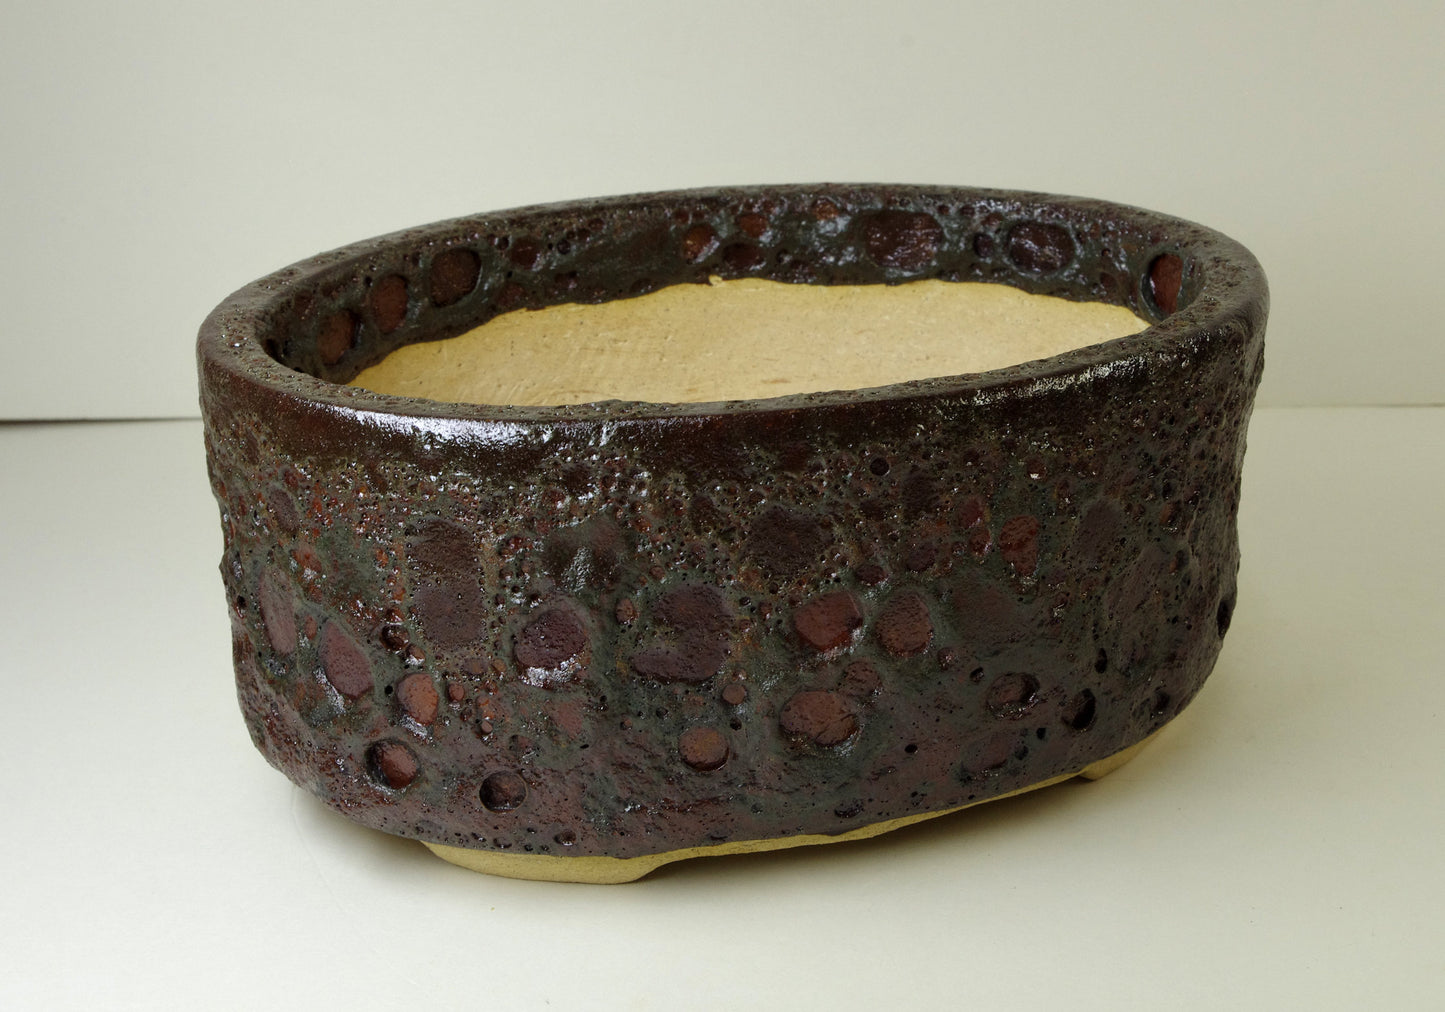 12104 Handmade Oval Stoneware Bonsai Pot, Reddish Browns Textured Crater Glaze, 8 1/4 x 6 1/2  x 3 5/8